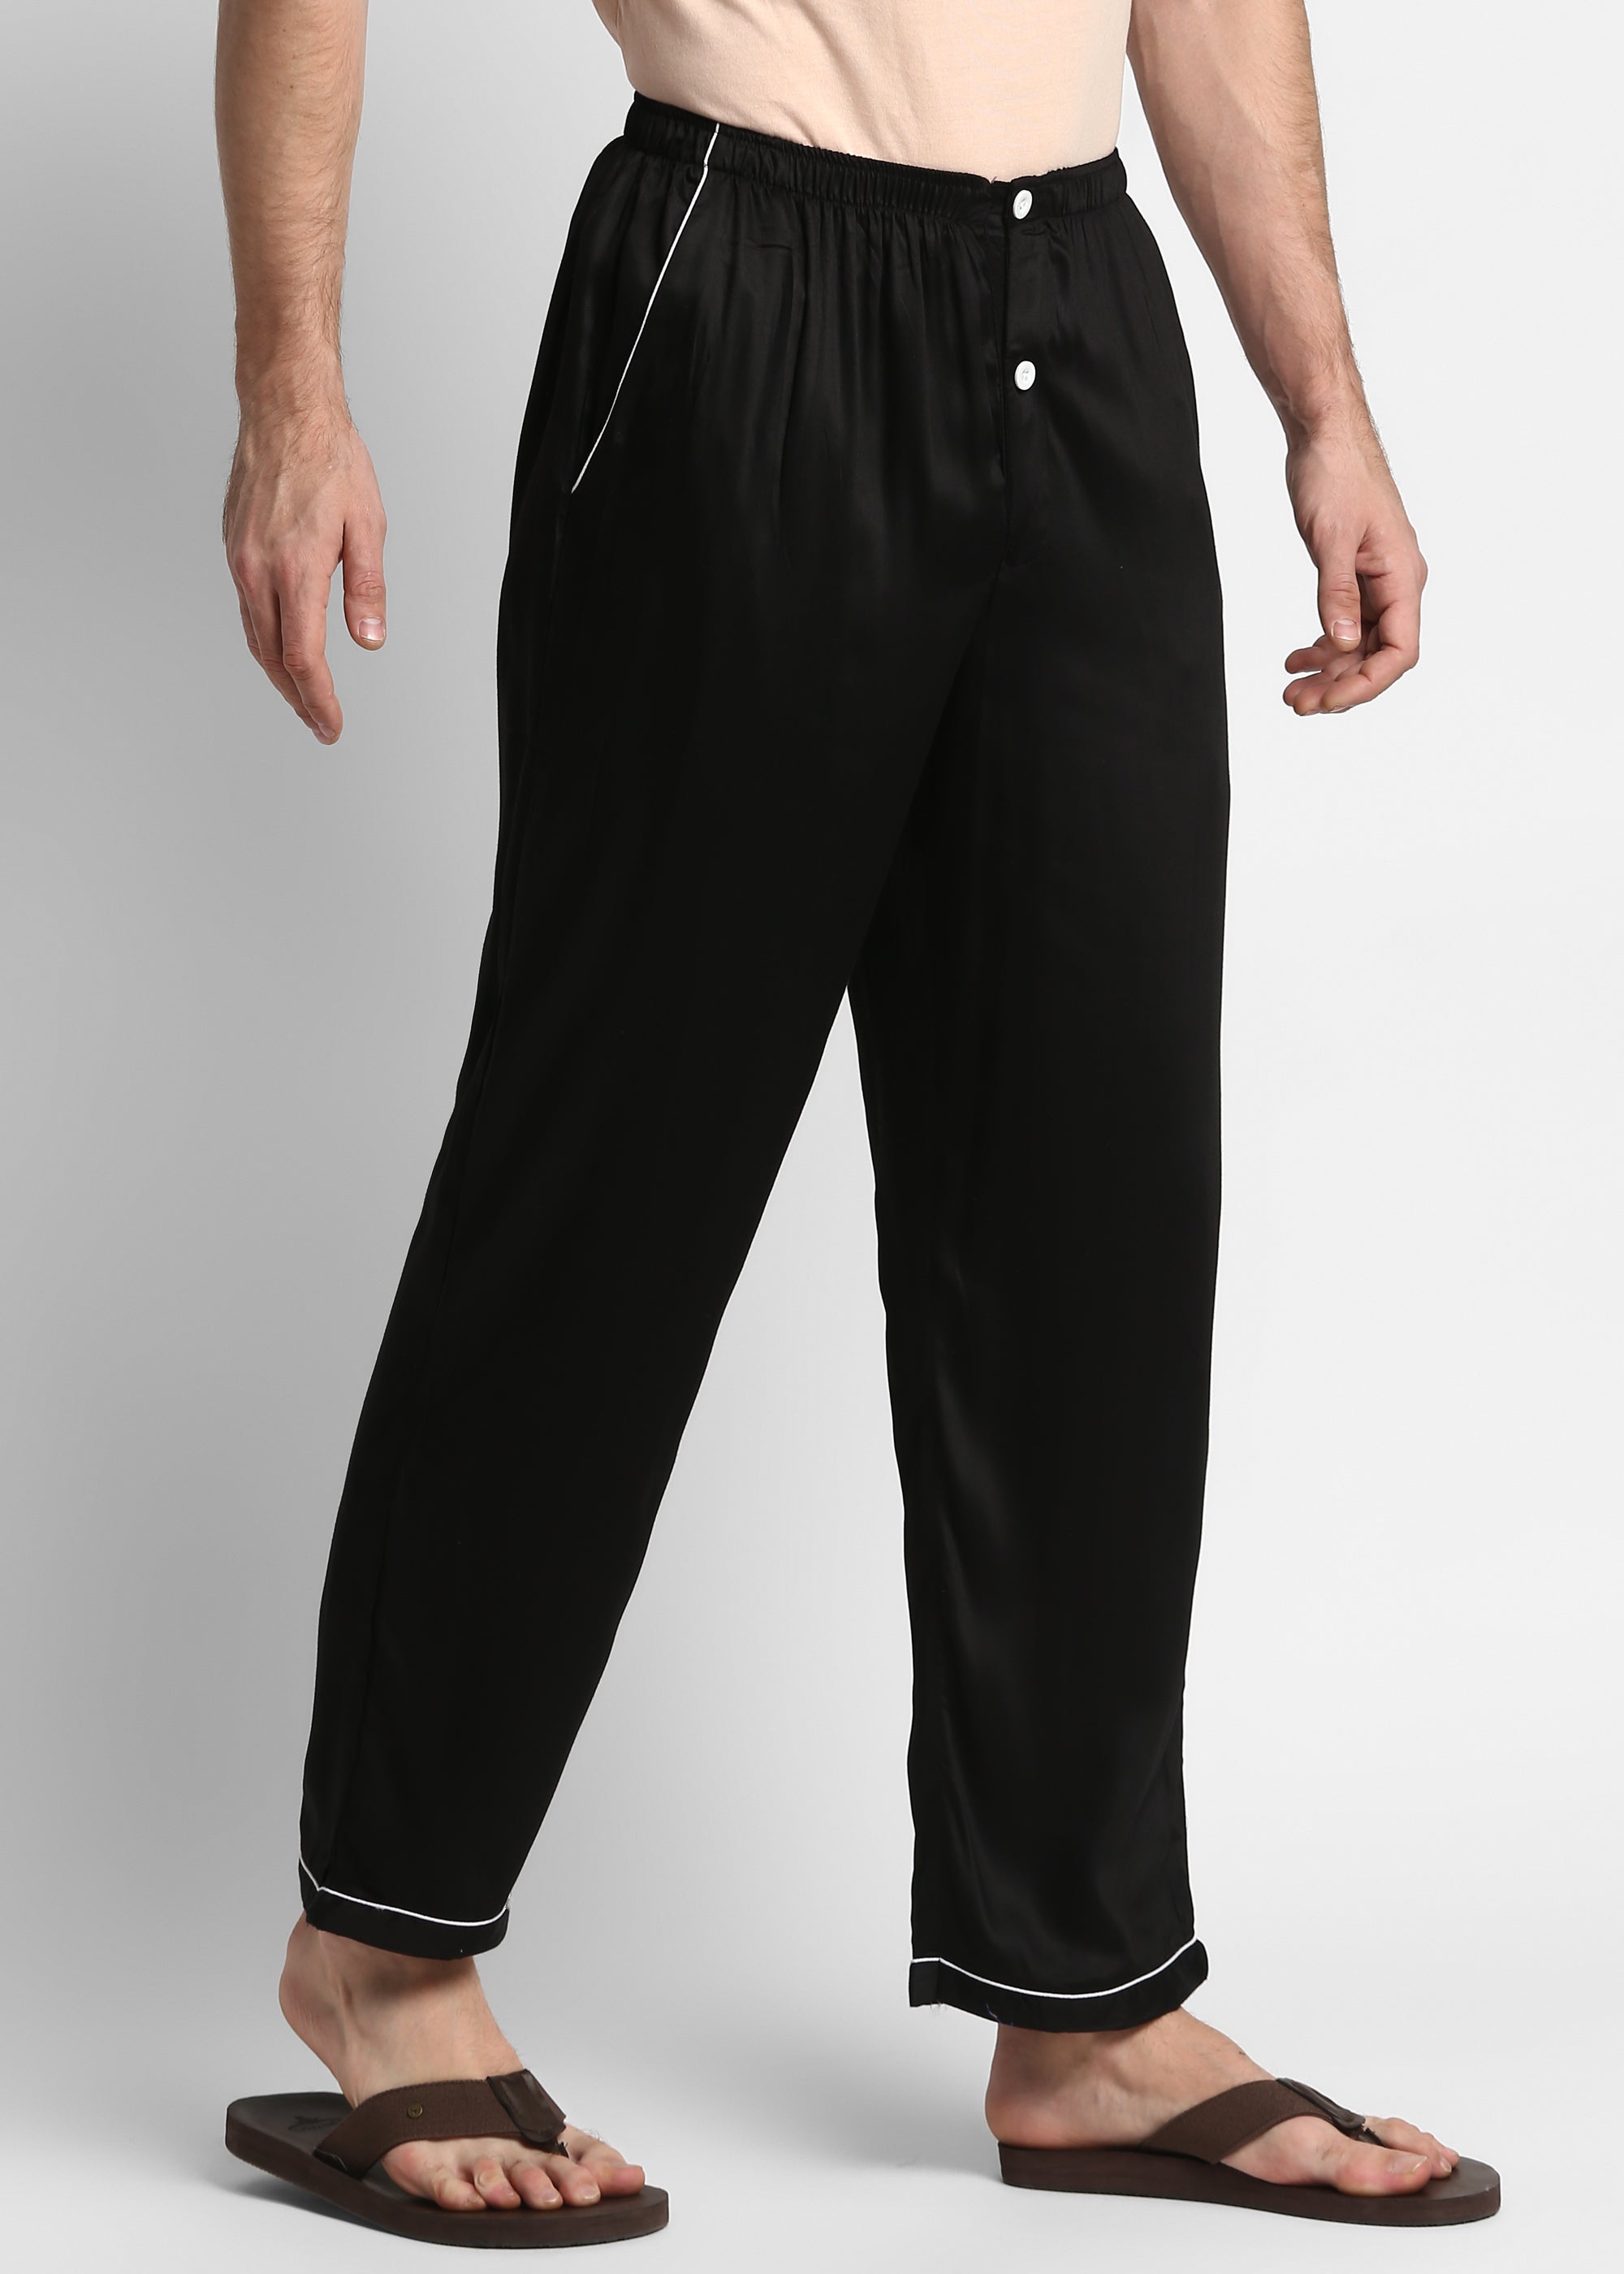 Ultra Soft Black Modal Satin Men's Pyjama Bottoms - Shopbloom